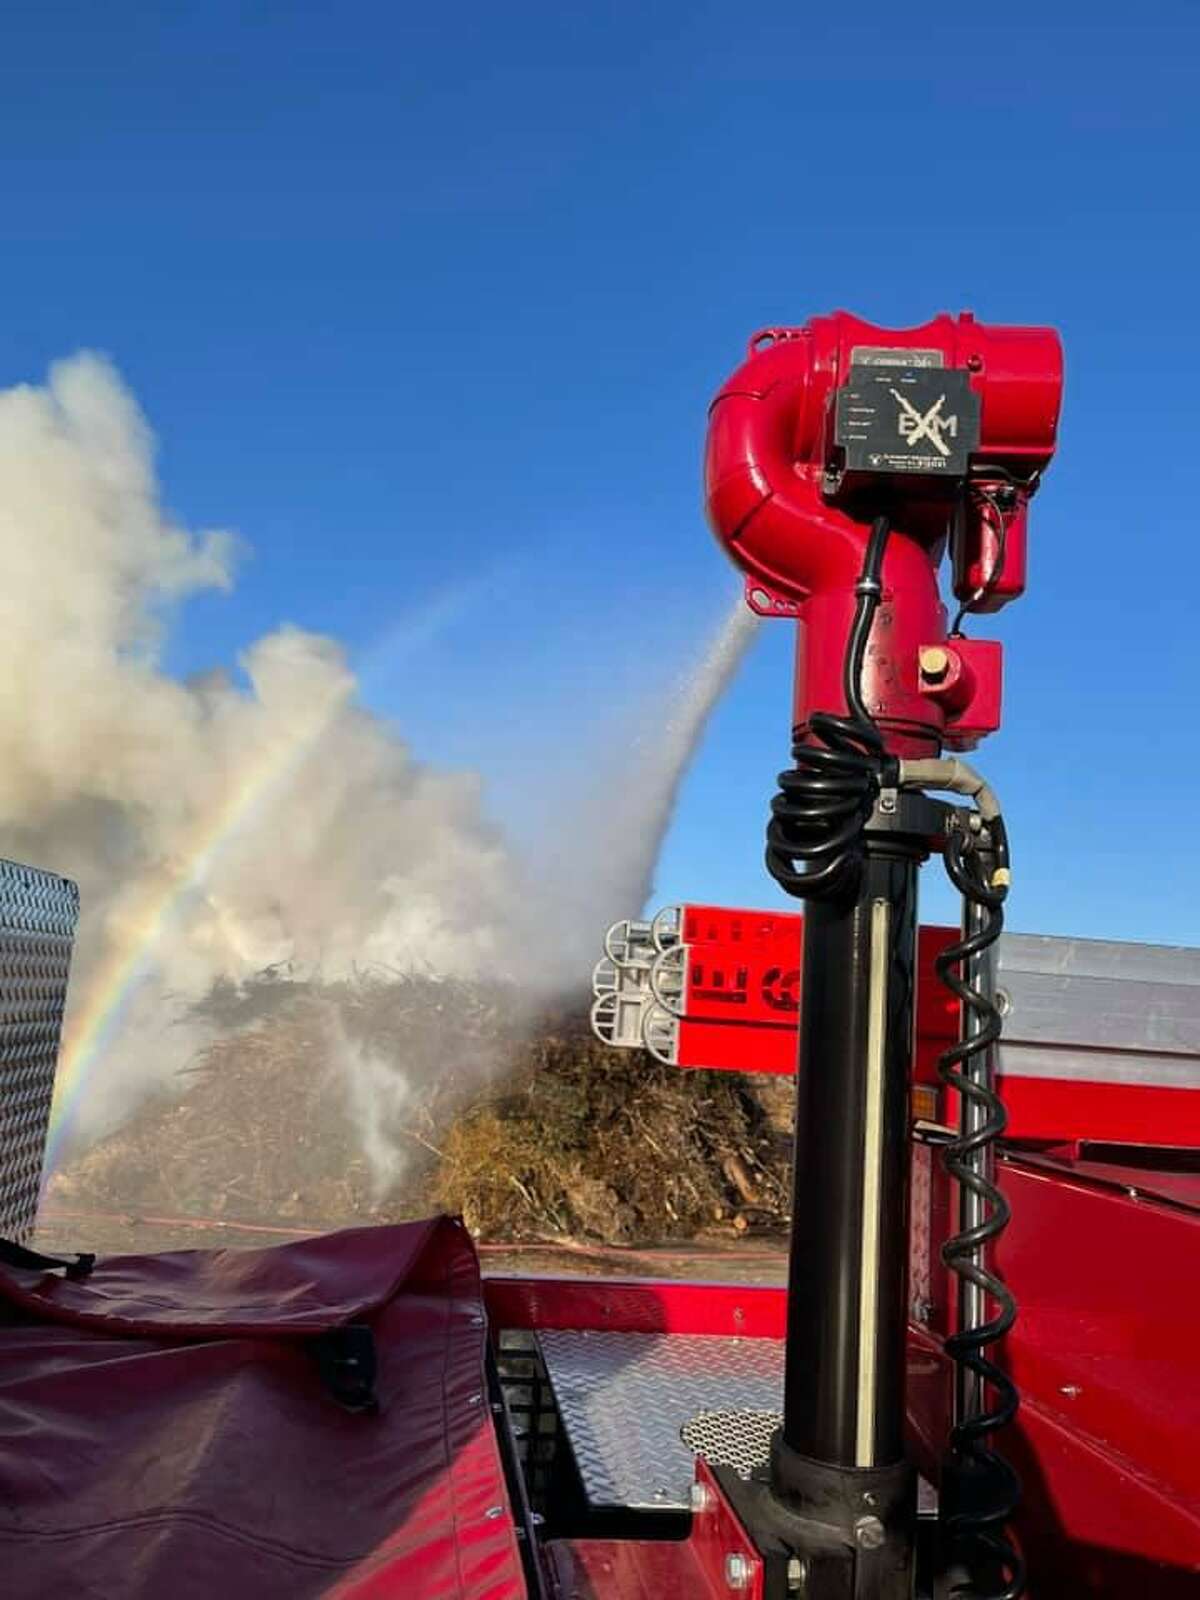 Crews battle a mulch fire in Ansonia, Conn., on Monday, April 5, 2021.